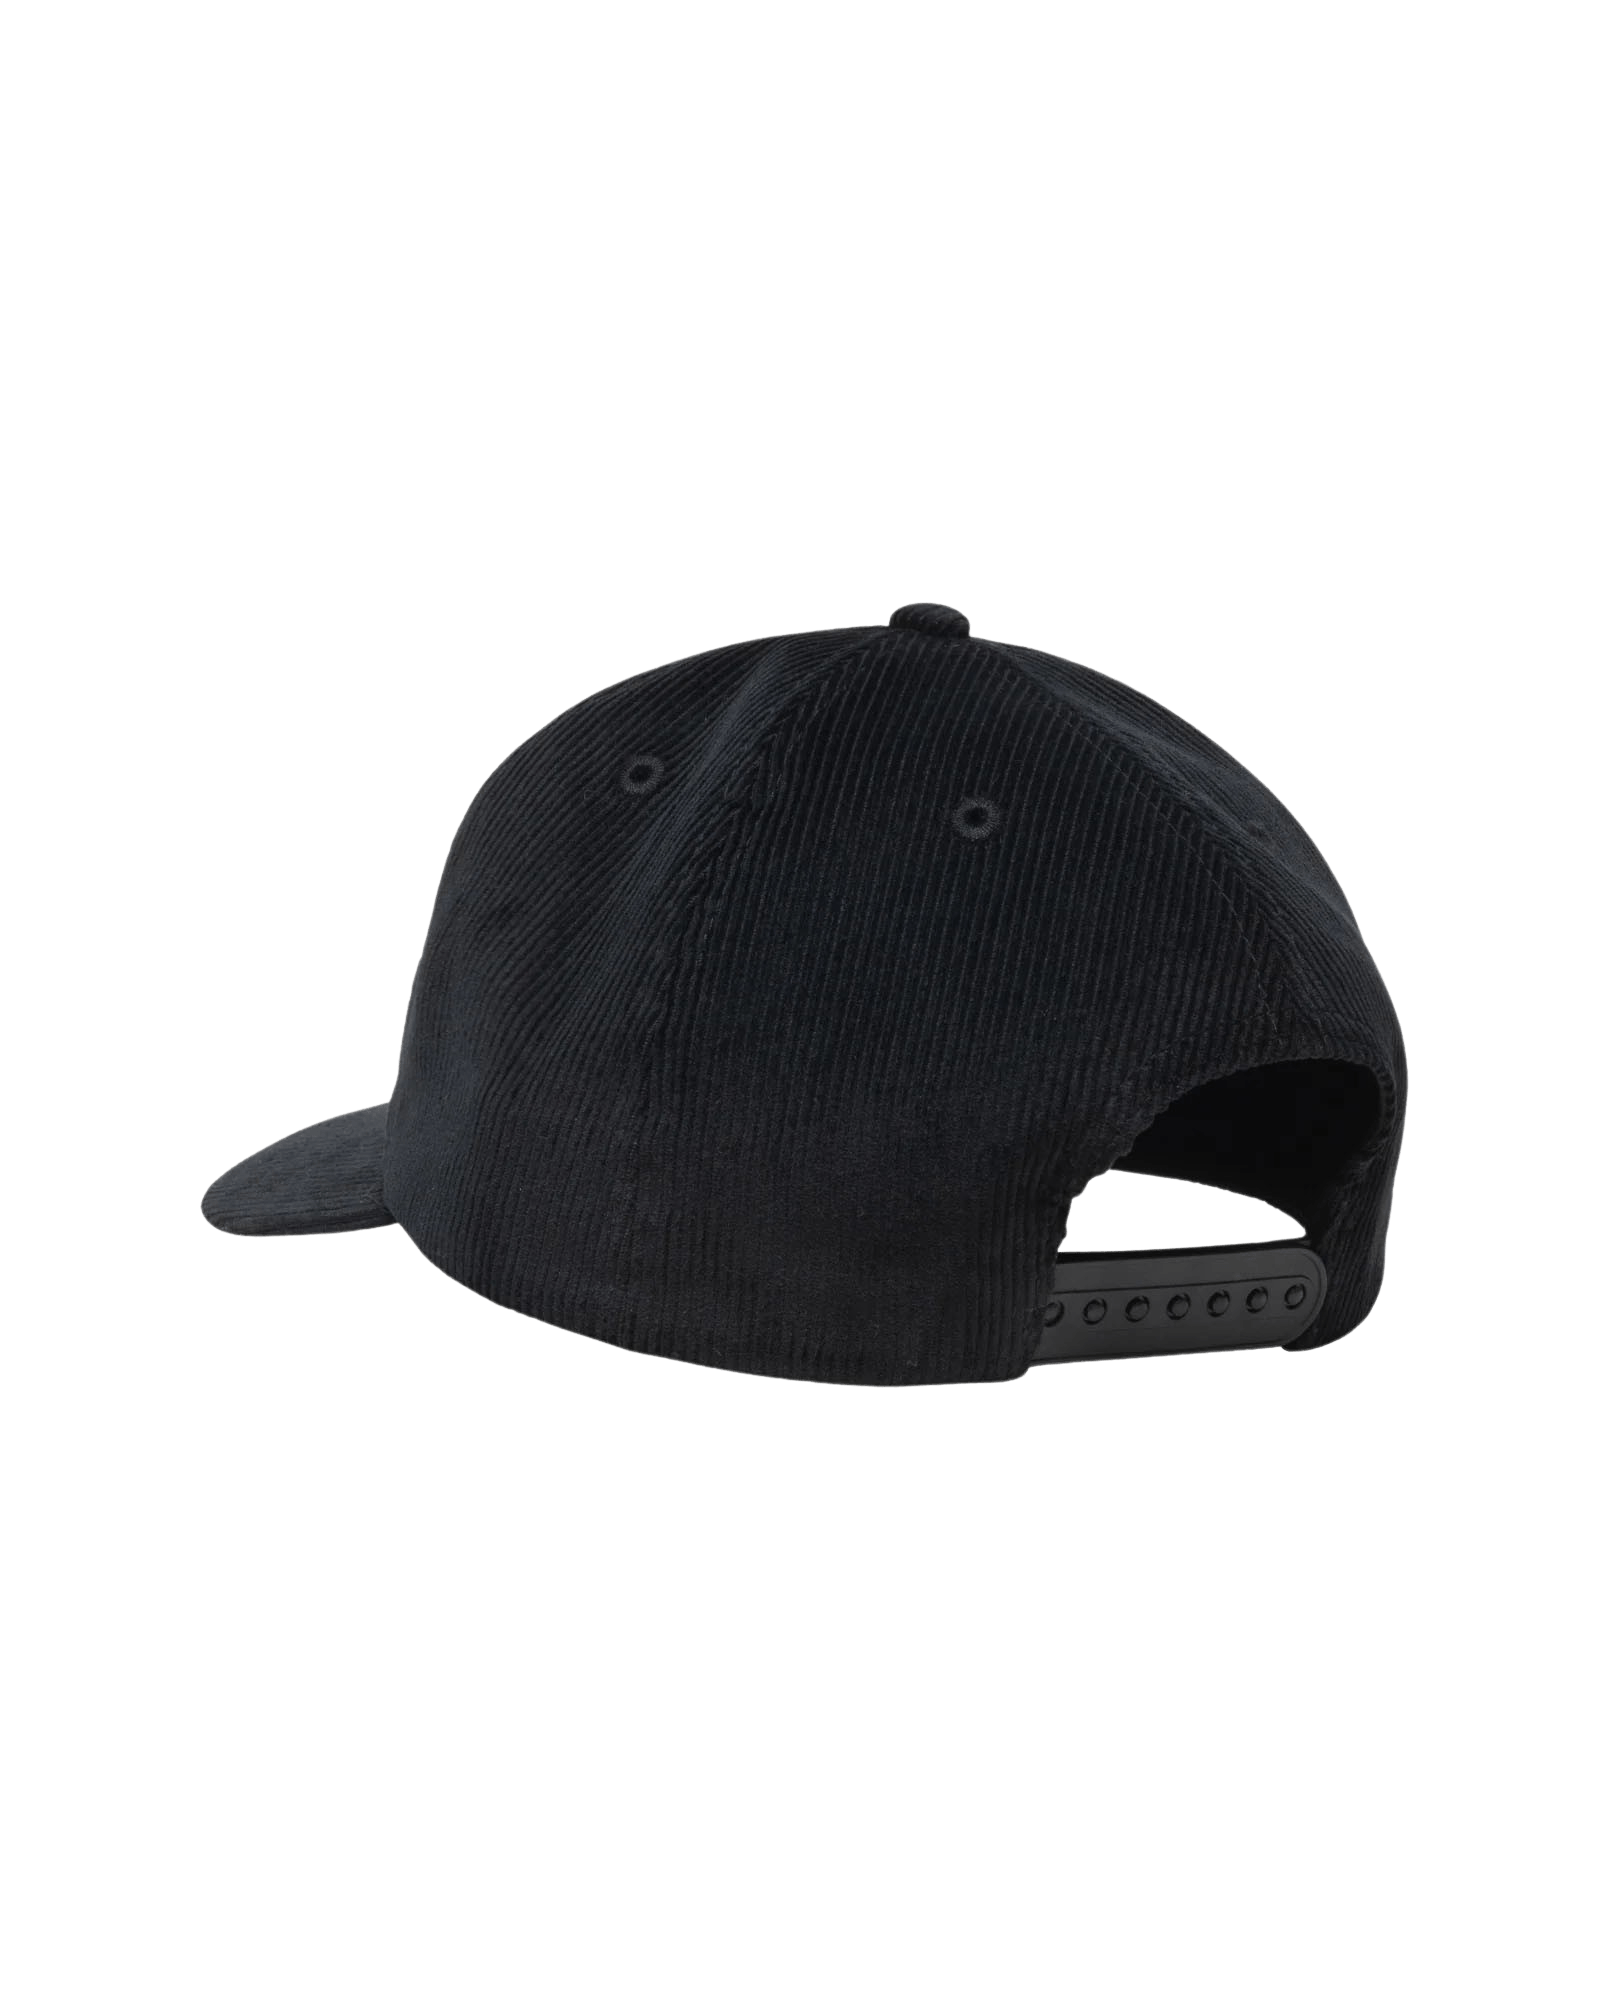 Corduroy Oe Cap $64 Stüssy Headwear Caps Black